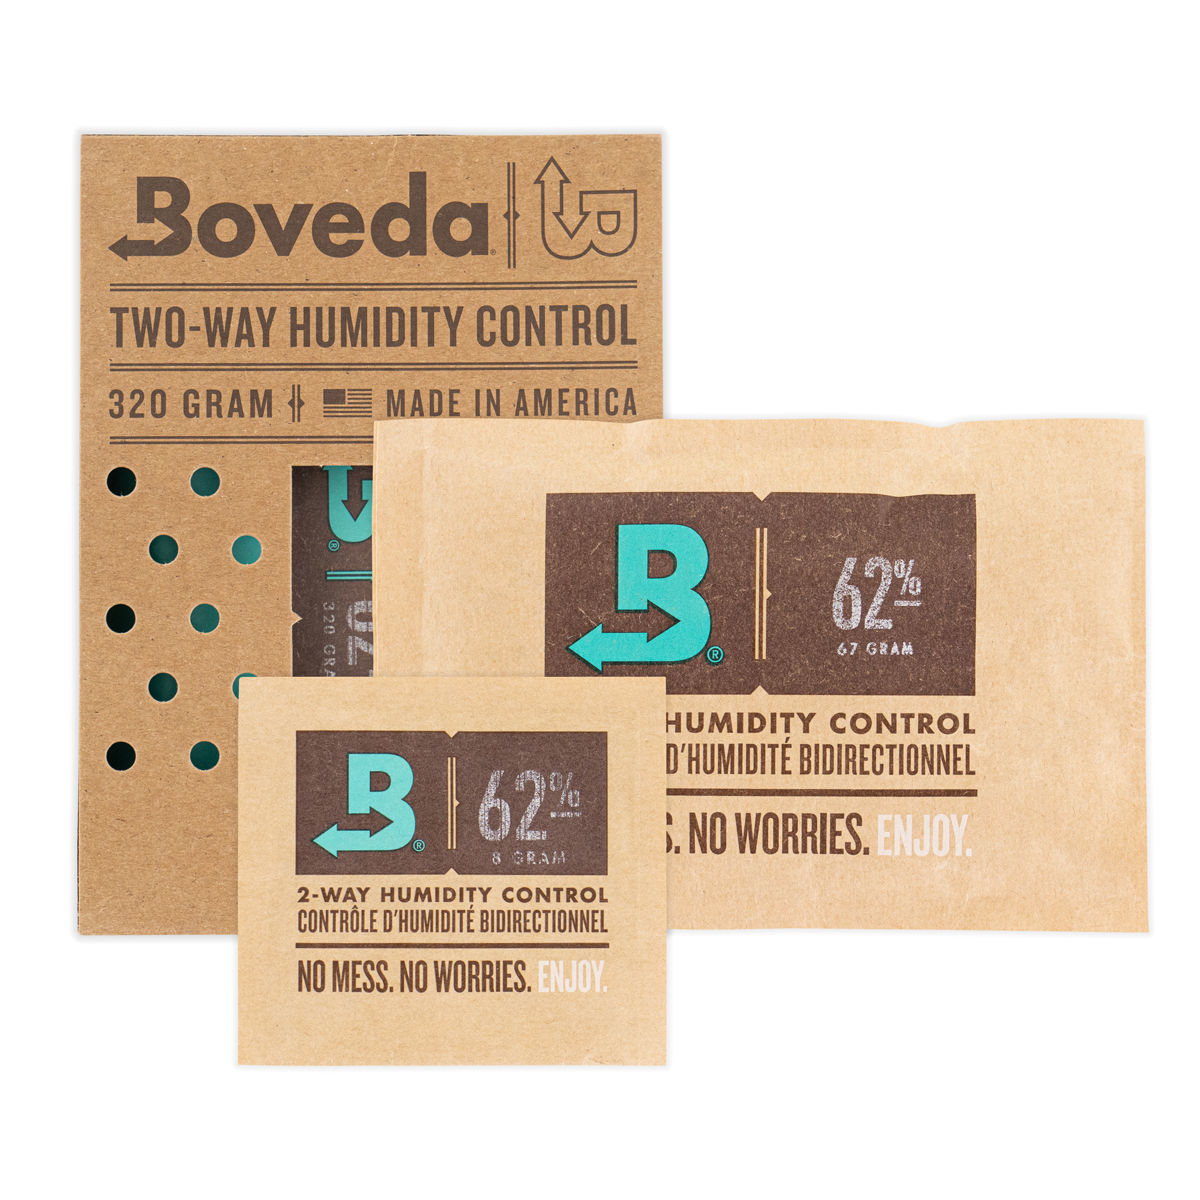 Boveda - Sachet de 320g, 62% d'humidité